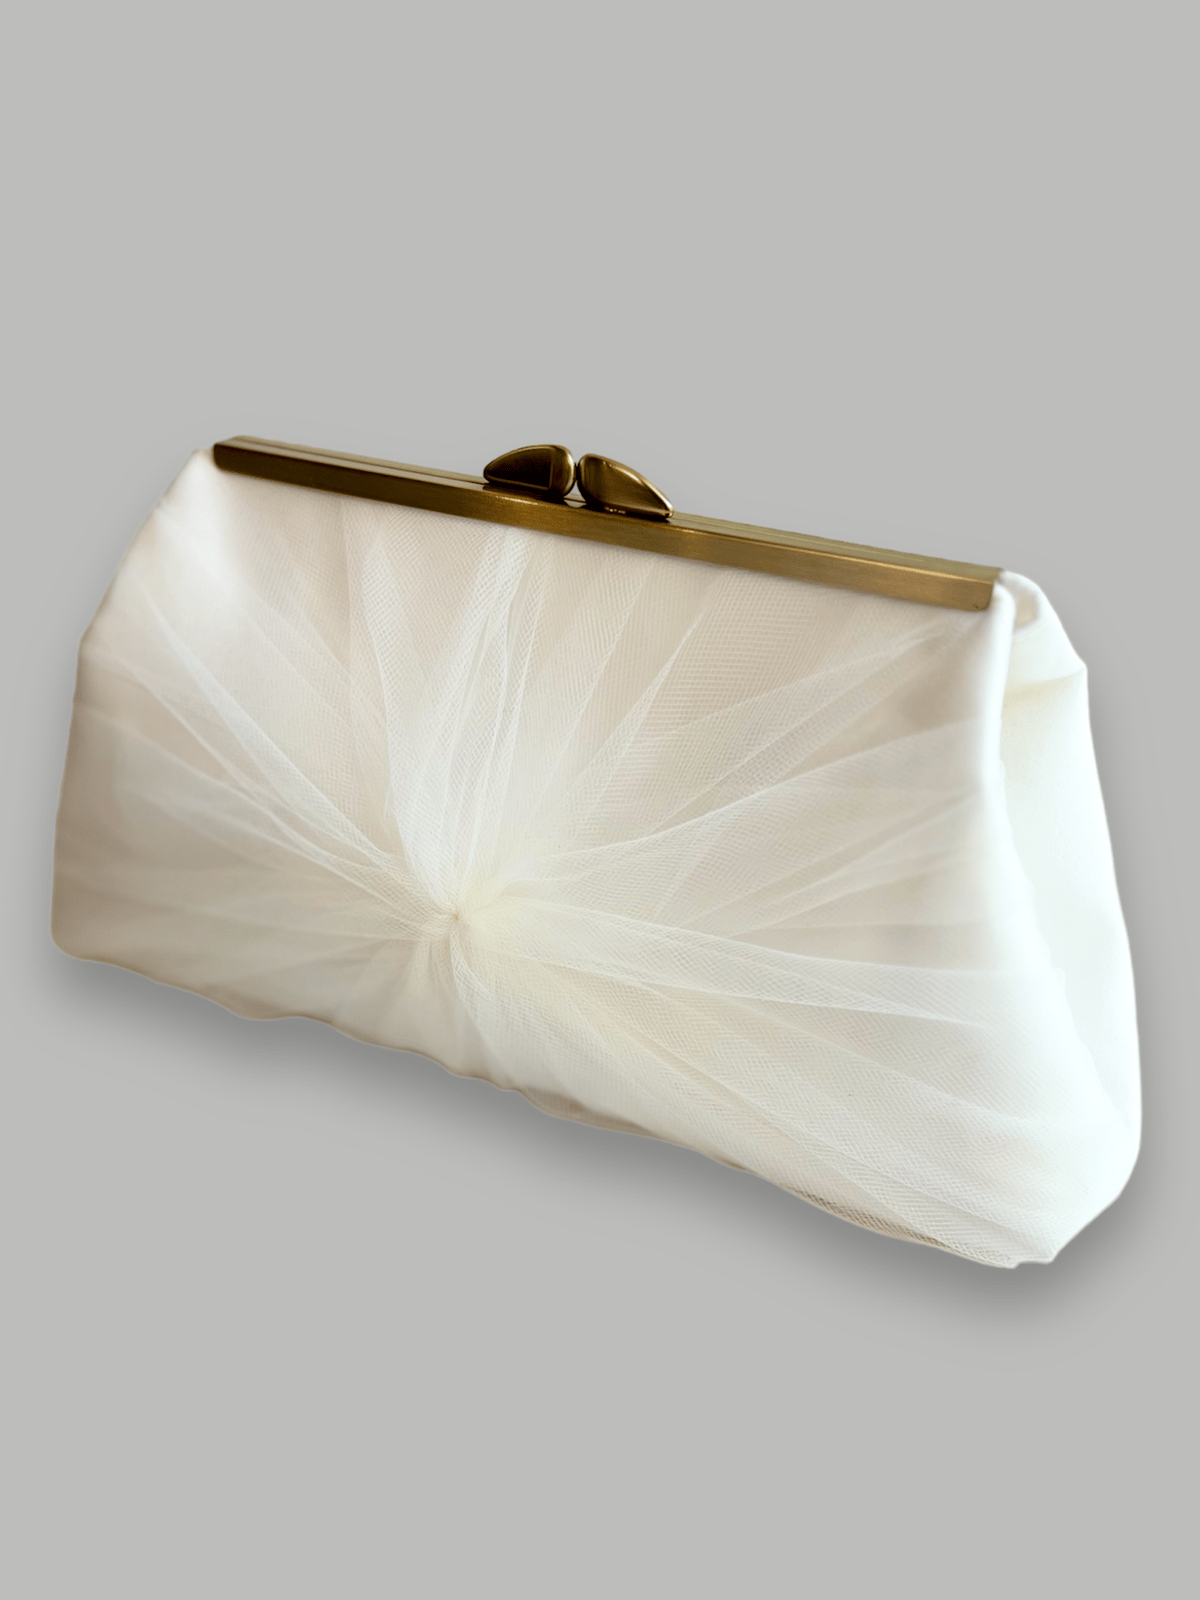 Blush Bridal Clutch Bag, Ivory Raw Silk Clutch With Rose Gold Details,  Pearl and Crystal Clutch Purse in Handwoven Silk, Custom Wedding Bag - Etsy